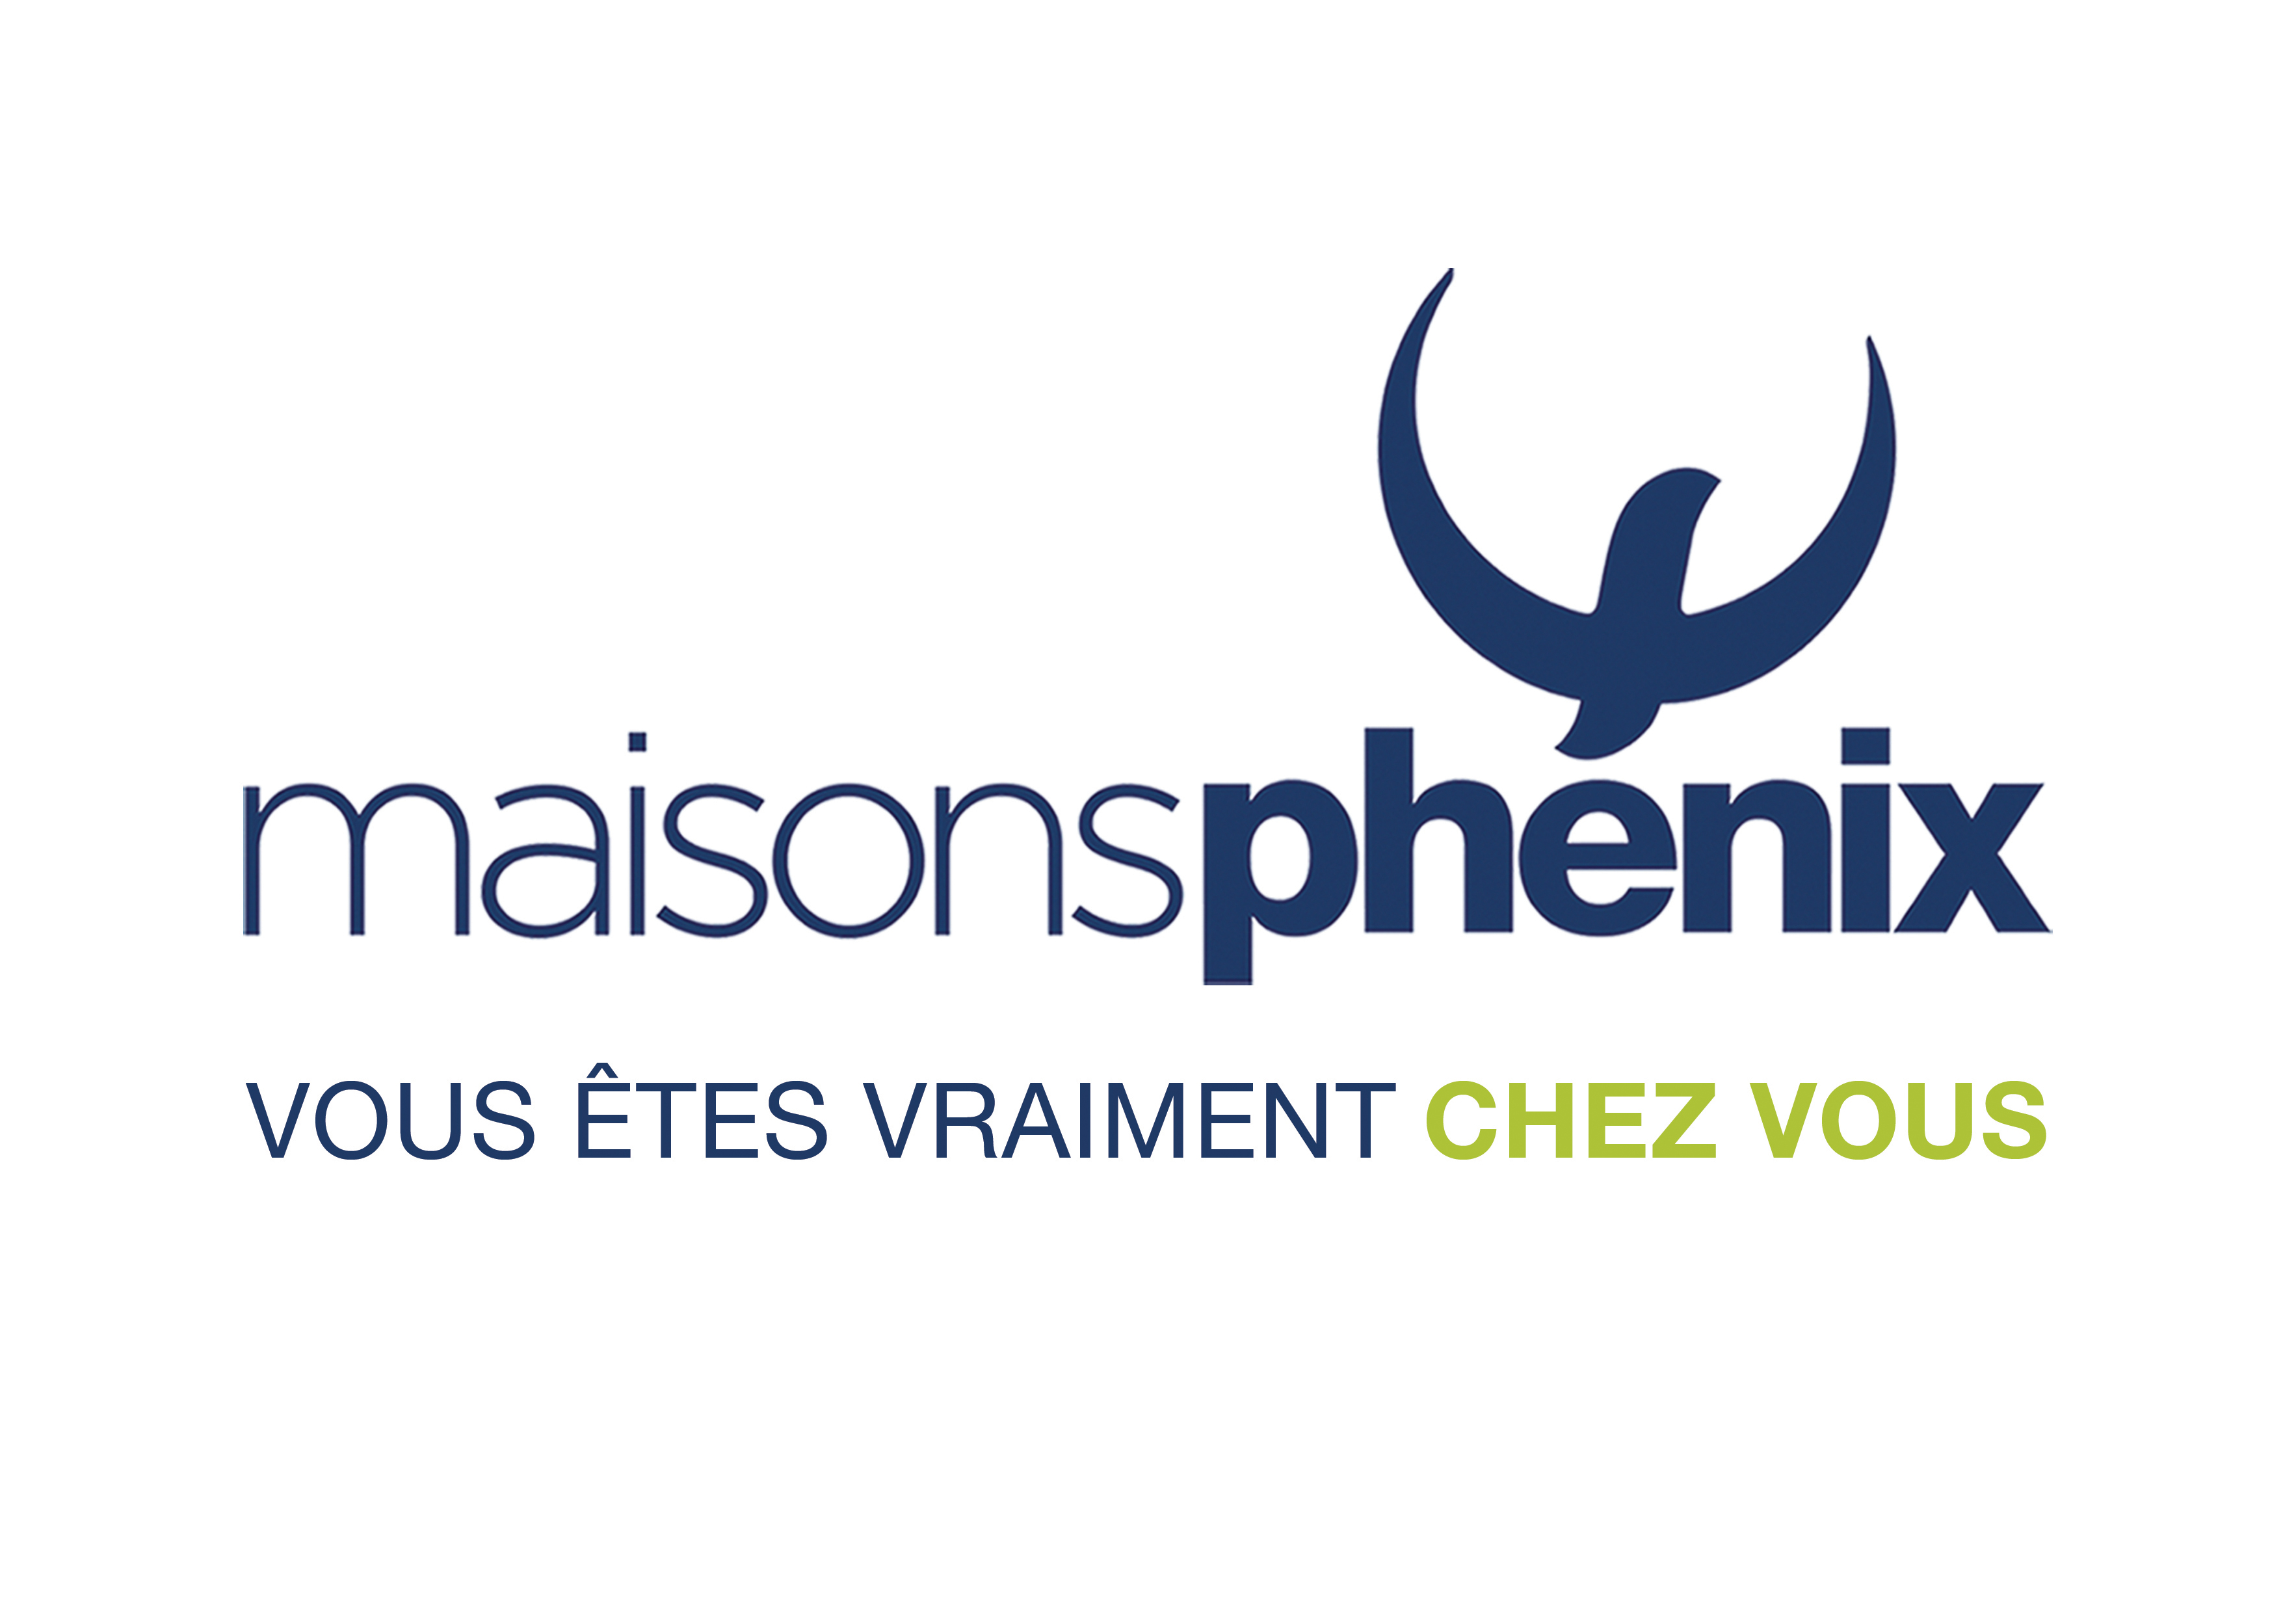 Maisons_Phenix_RVB